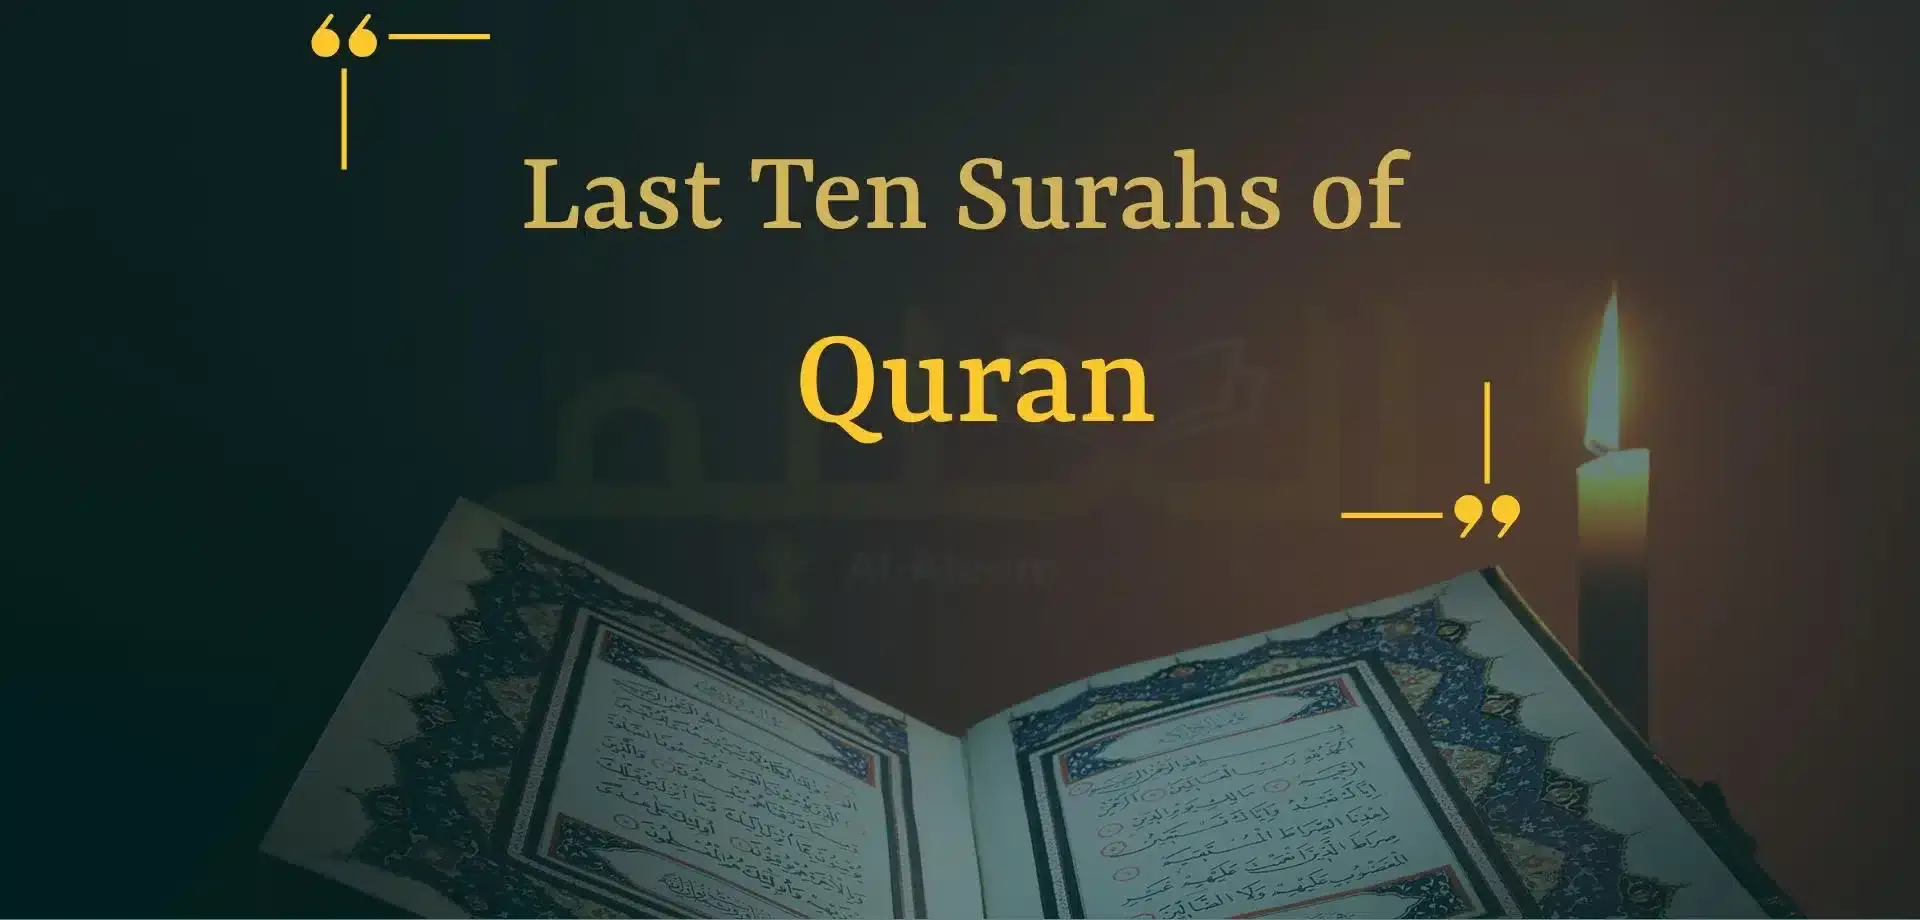 Dark-Orange-Reading-Quran-in-Ramadan-Quote-Instagram-Post-1920-×-920-px-jpg